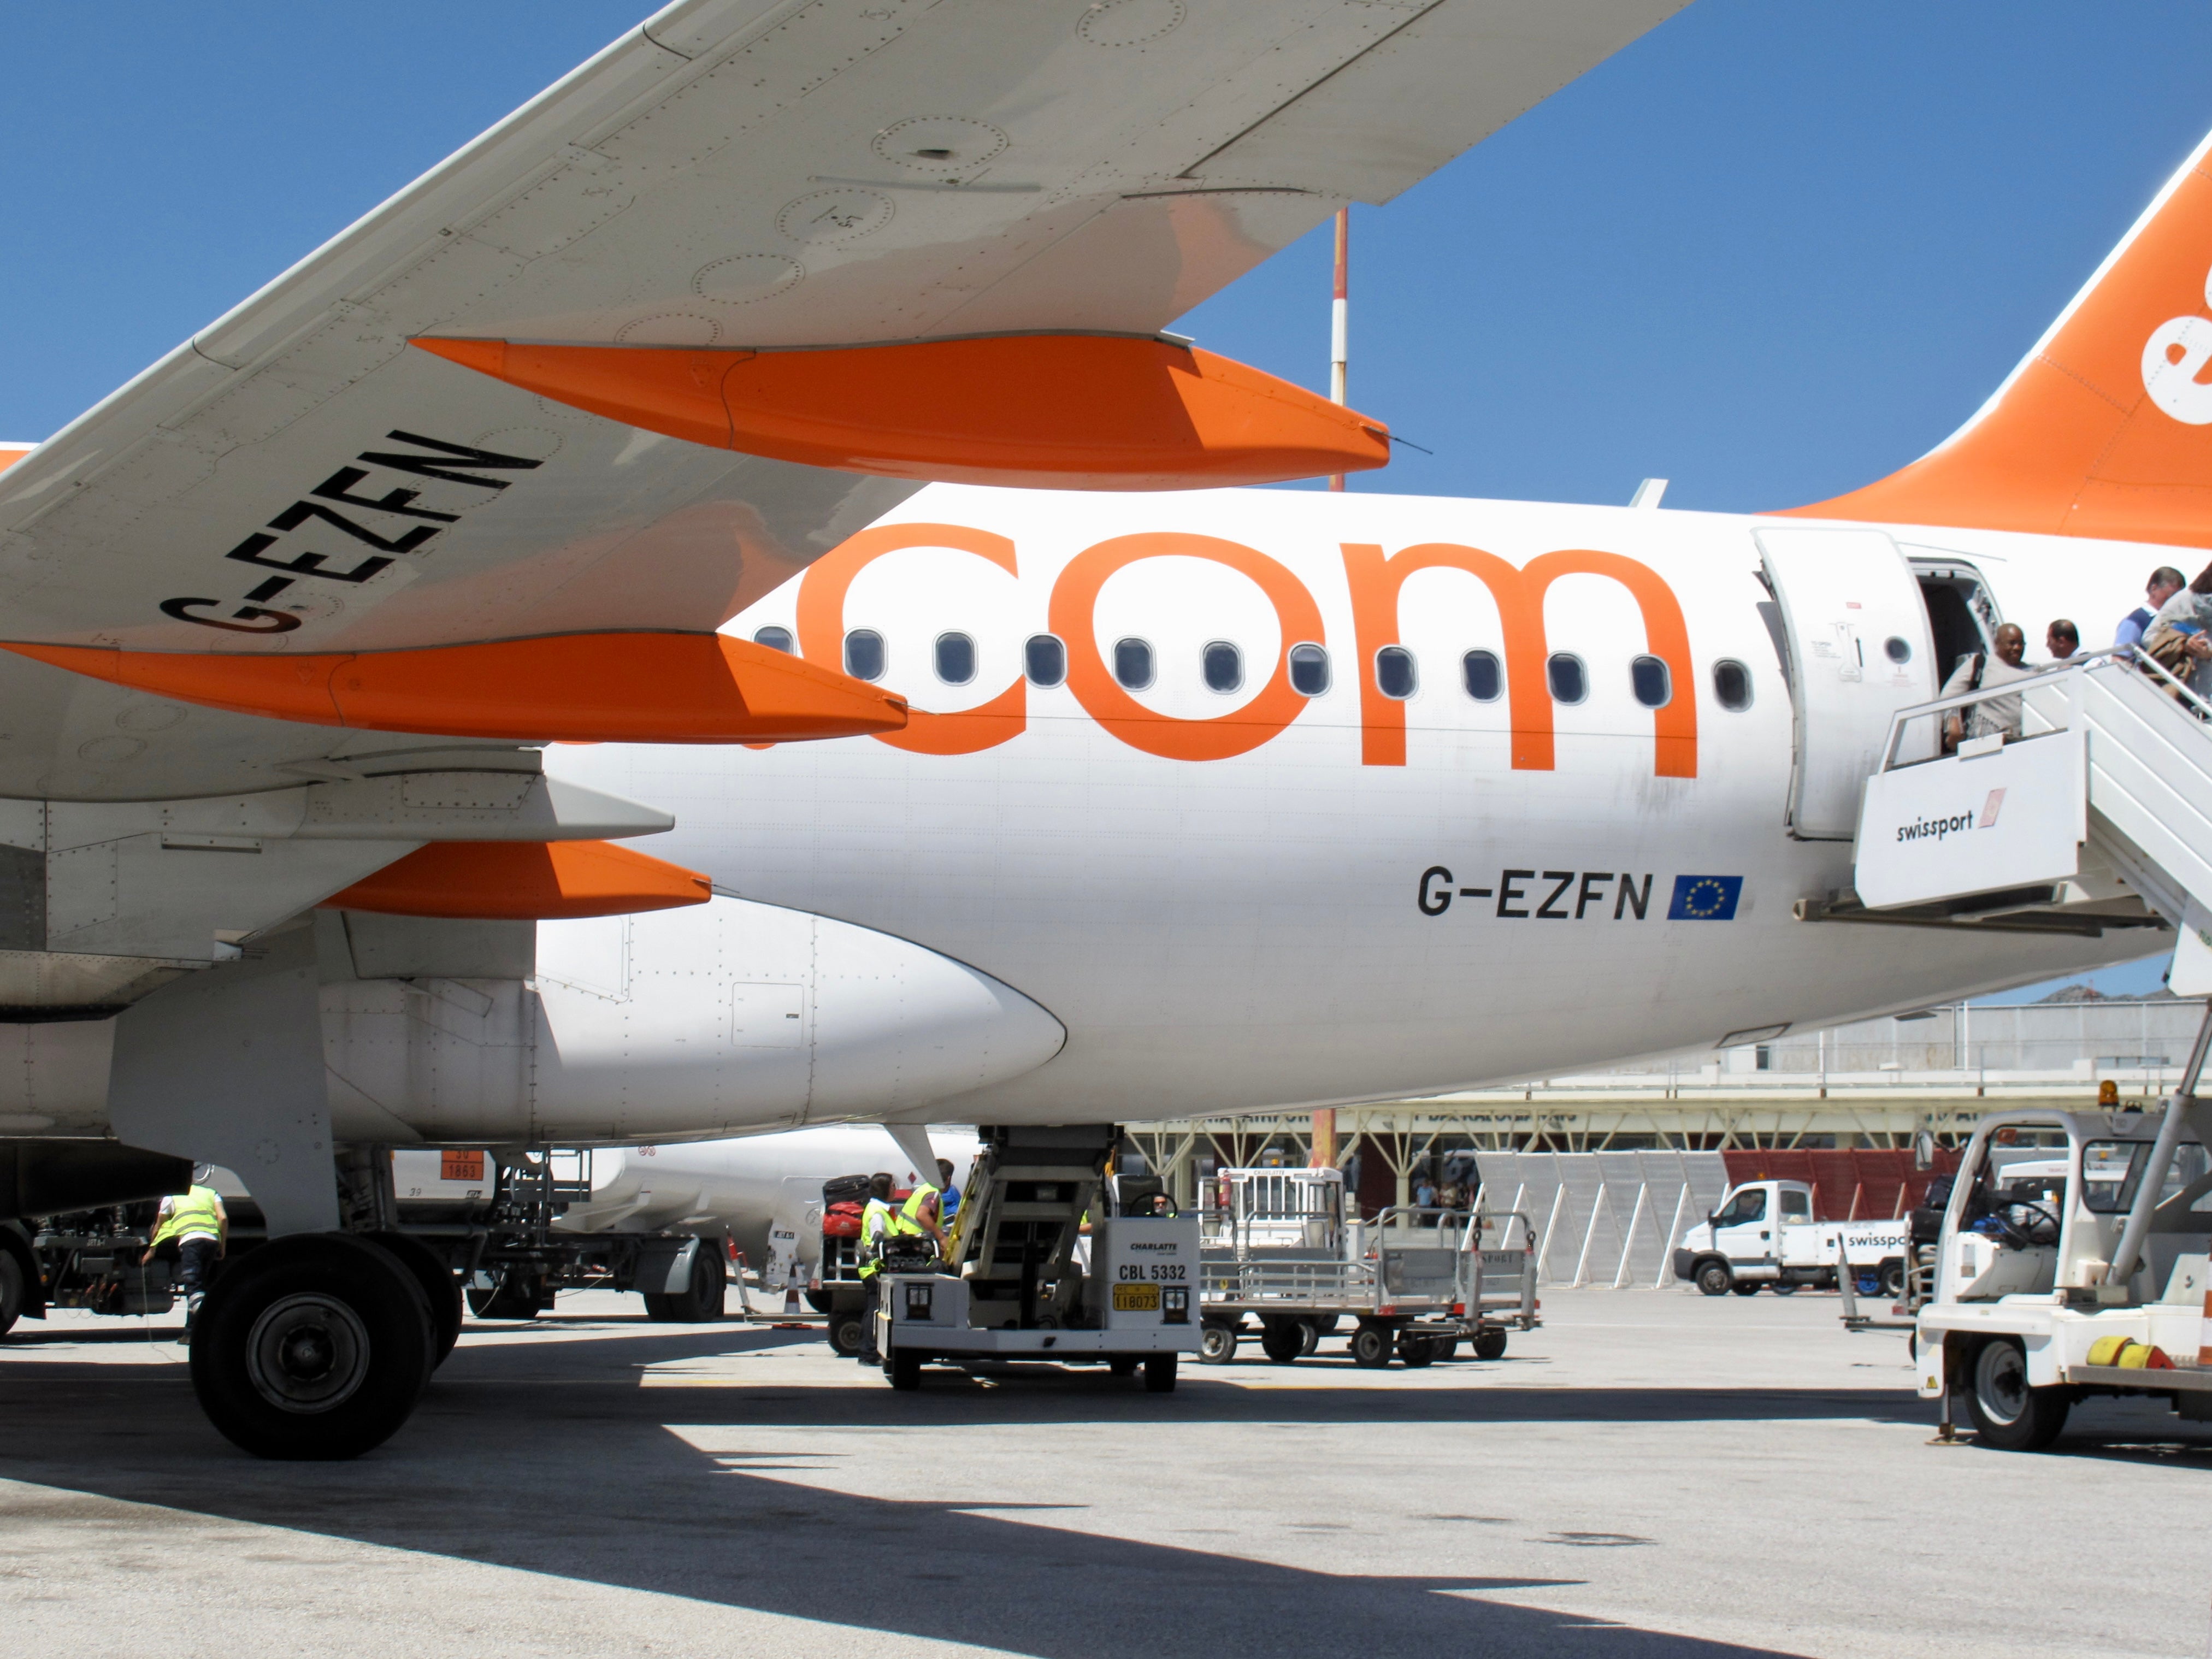 Departing soon? easyJet Airbus A320 at Catania airport